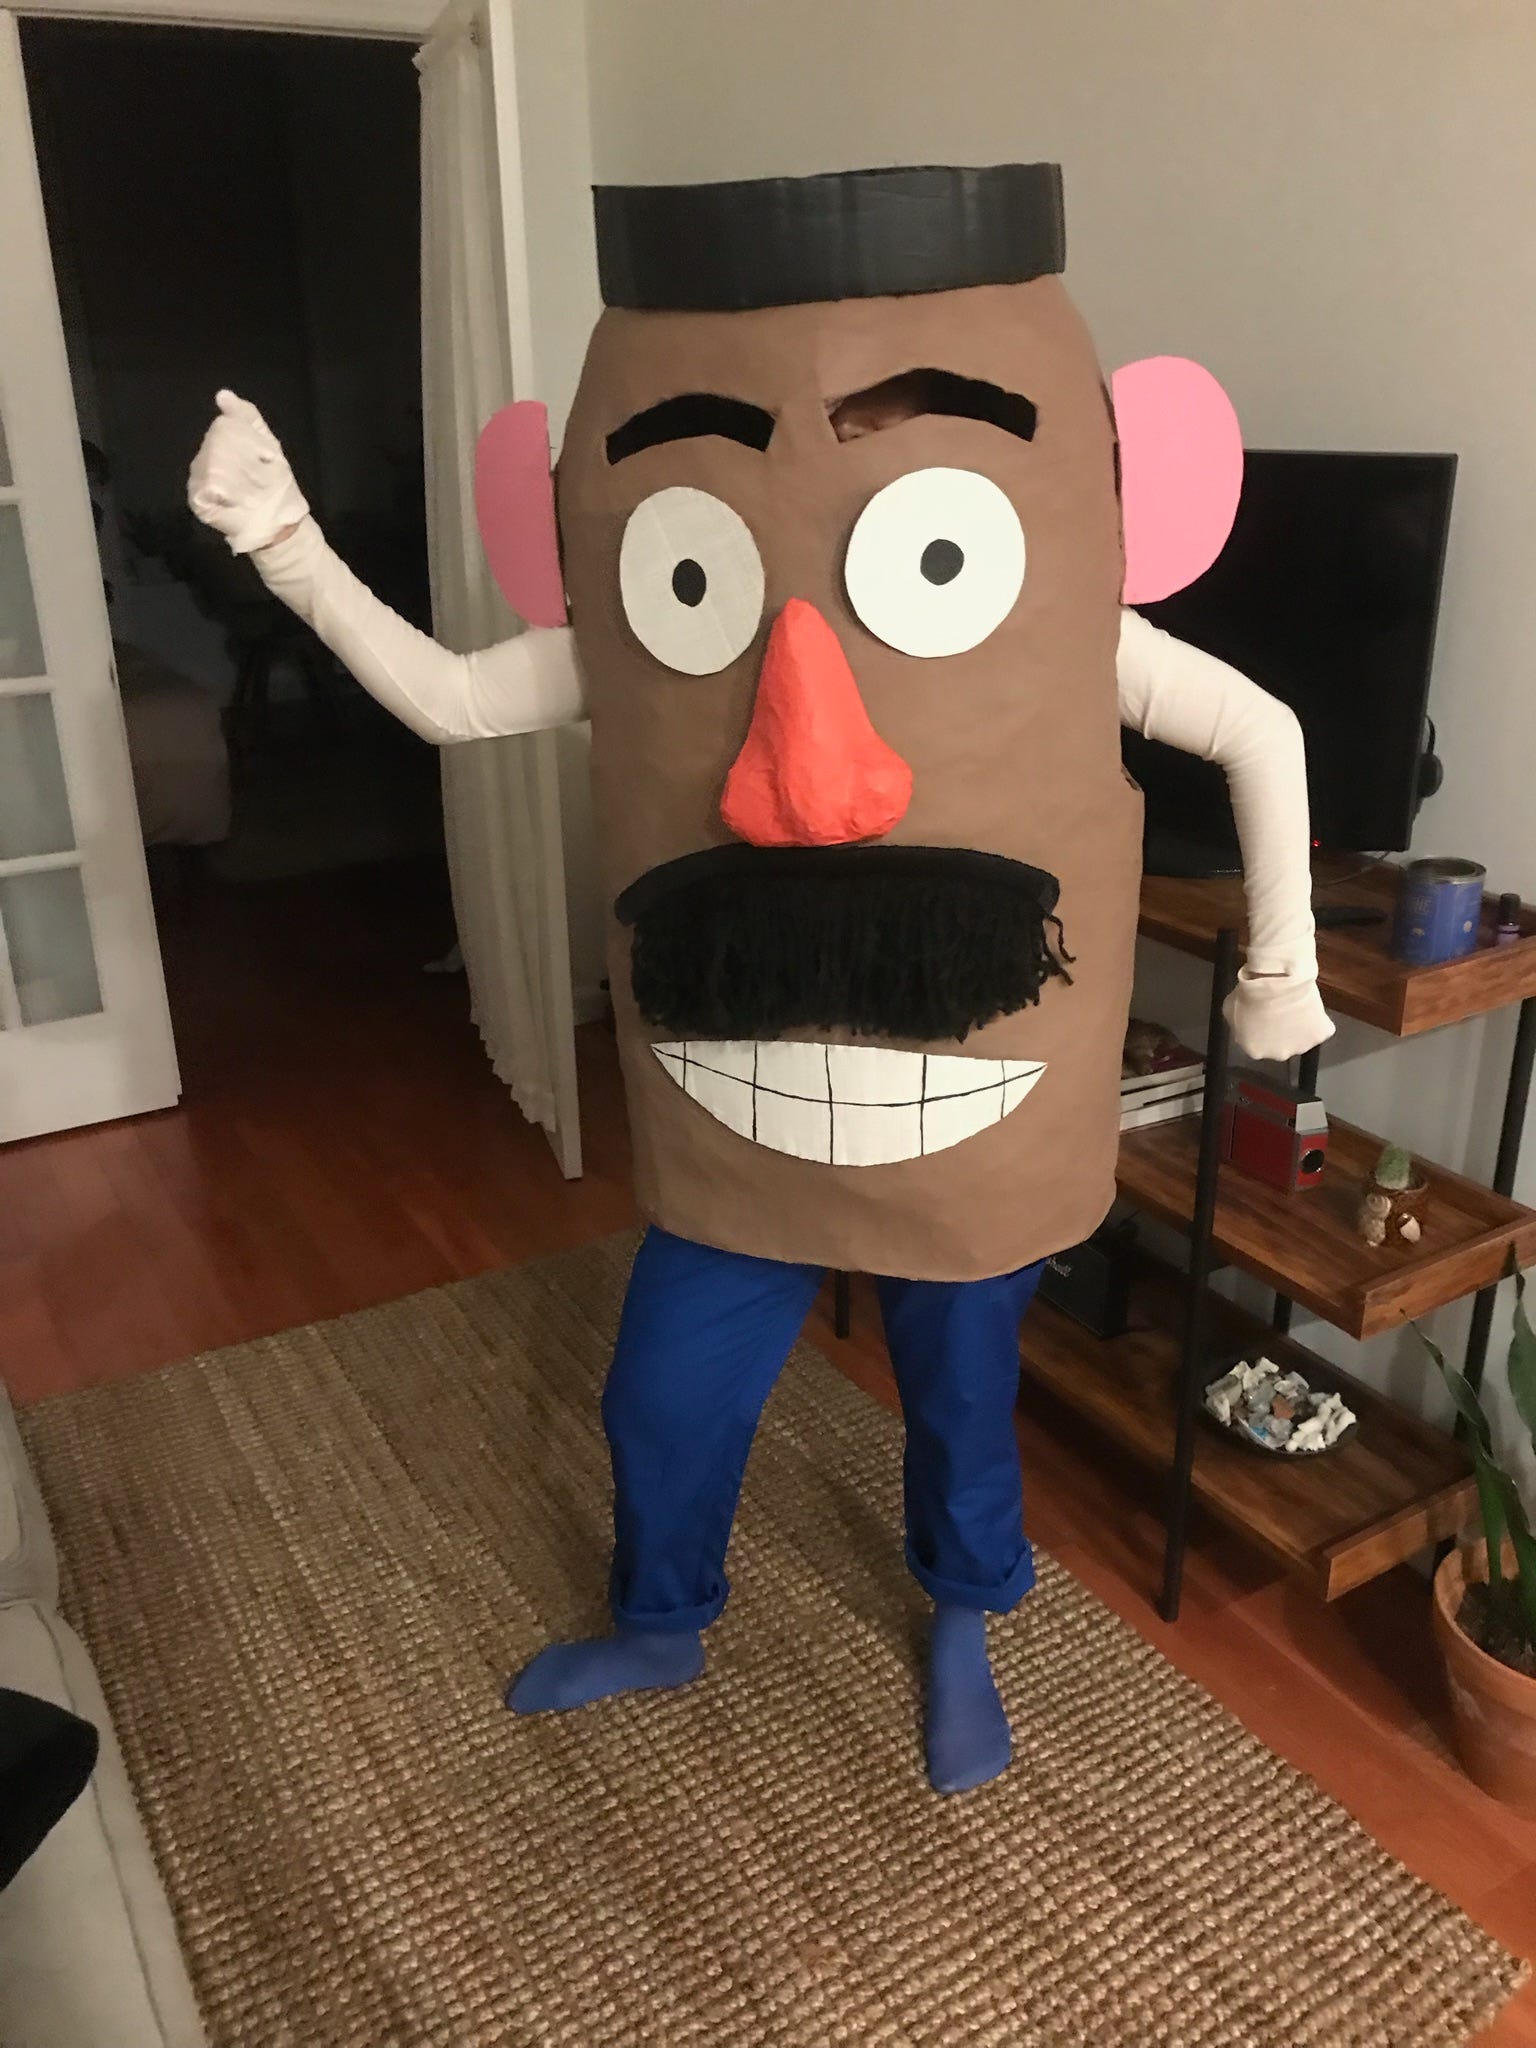 Mr. Potatohead Costume Tutorial. “Why didn't Mr. Potatohead want to go… |  by Rina Kim | Medium